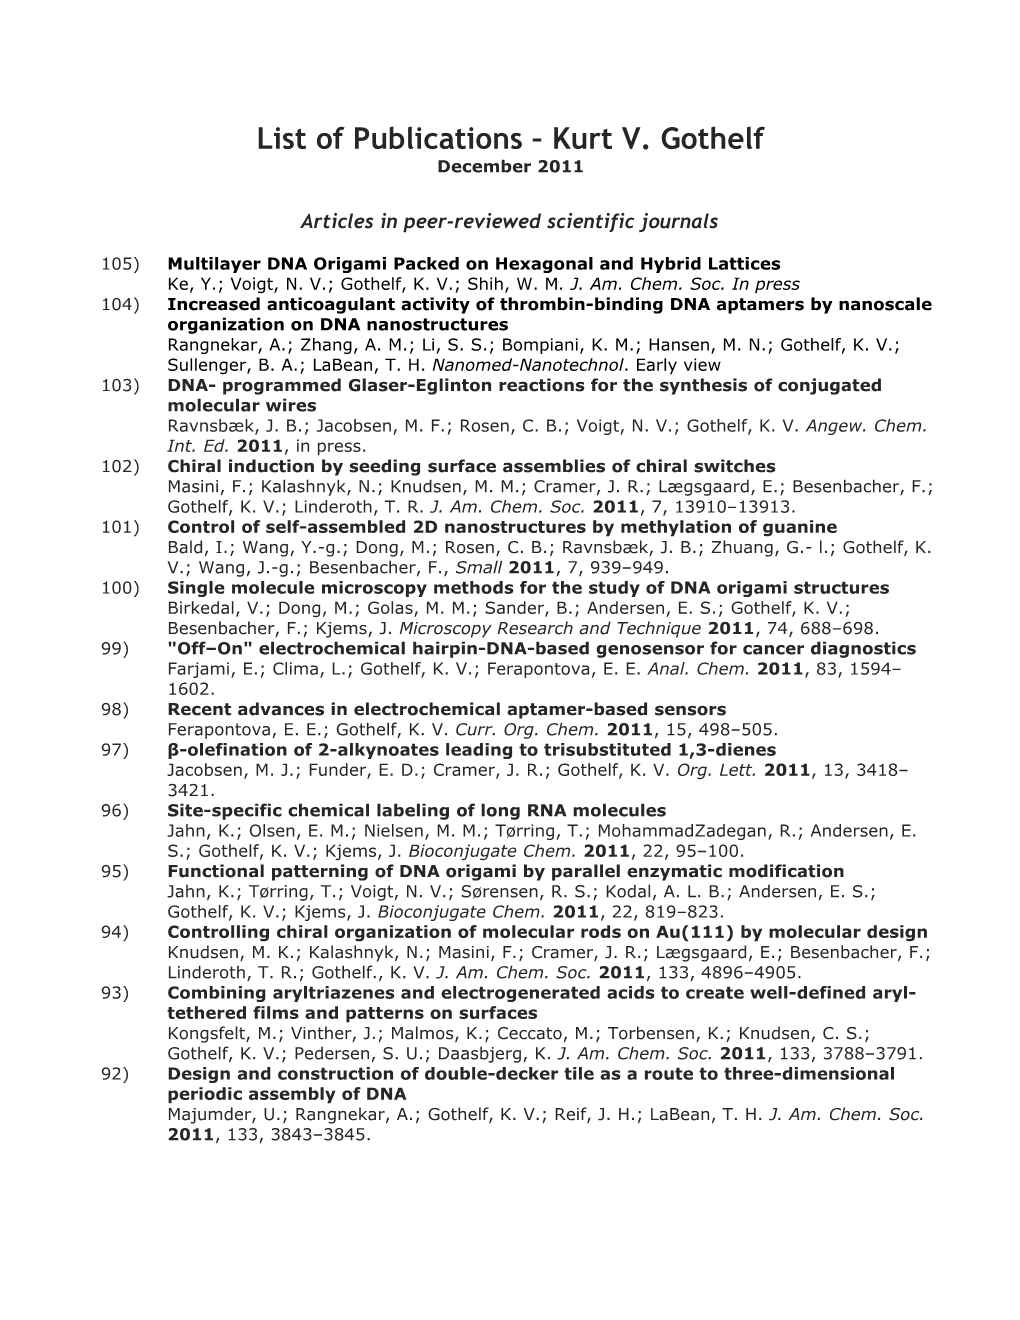 List of Publications Kurt V. Gothelf